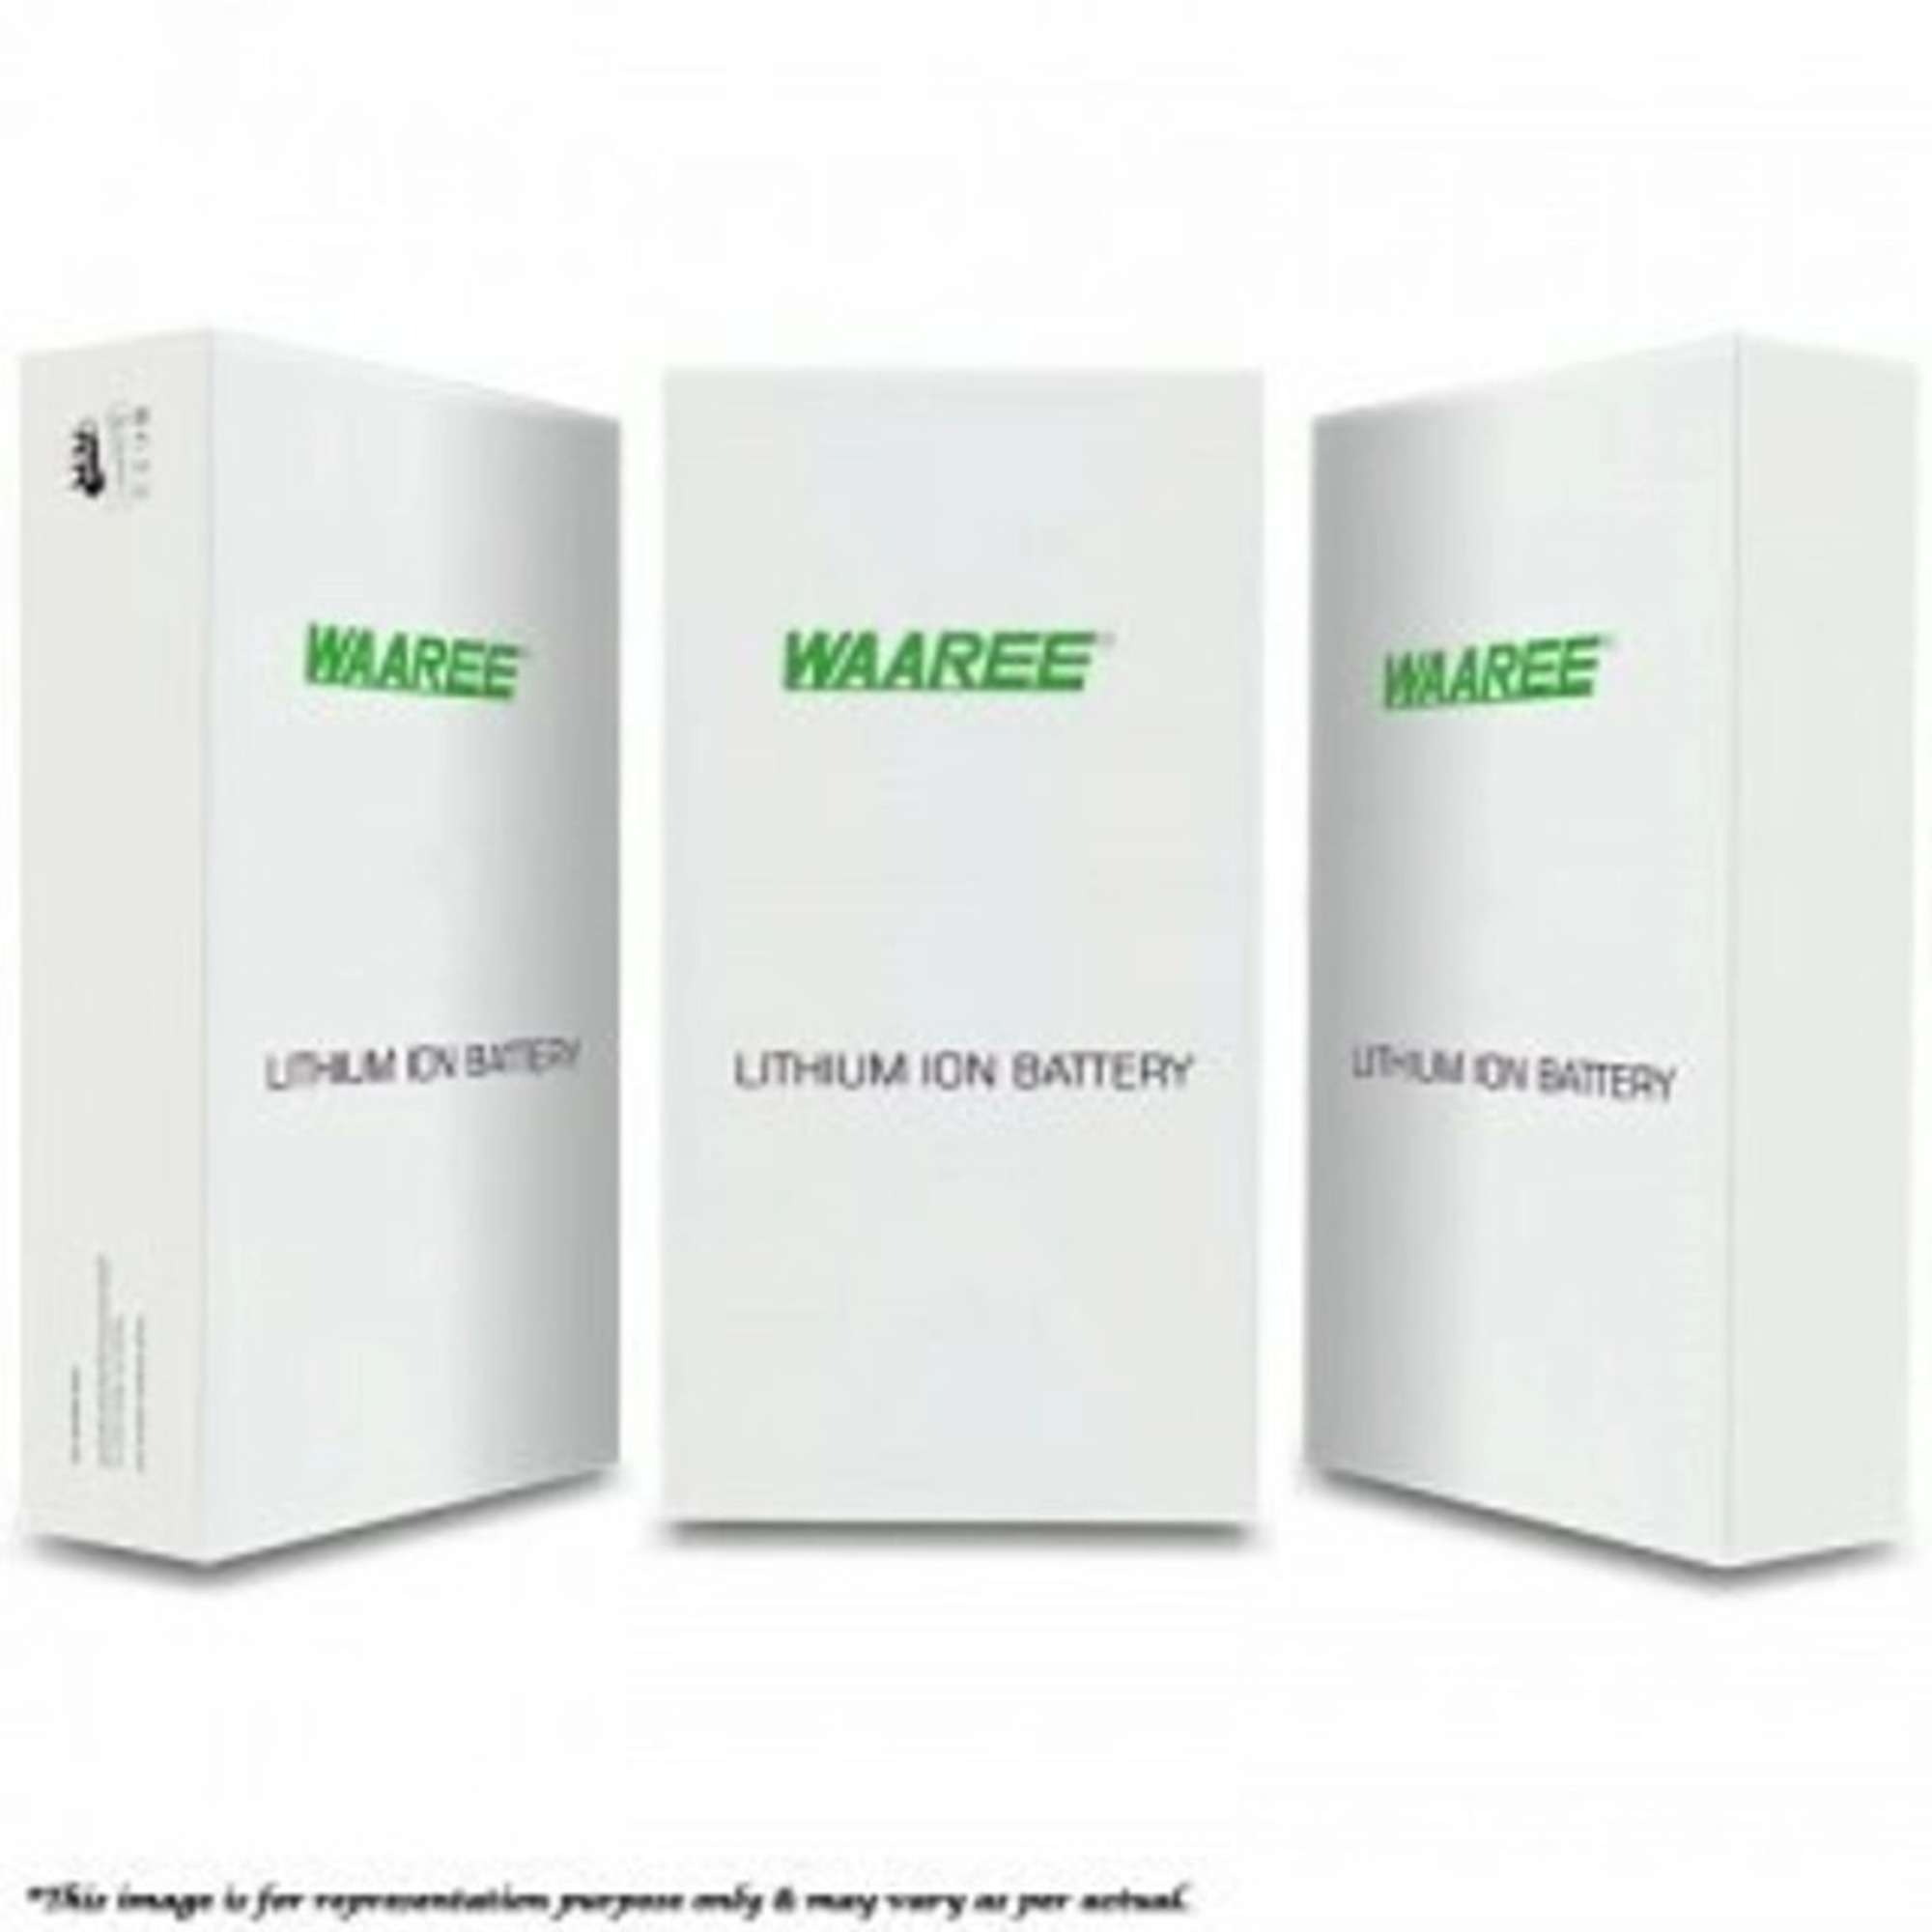 Waaree 48V/100 Ah (4800 Wh) Li-Ion LFP Battery Packs